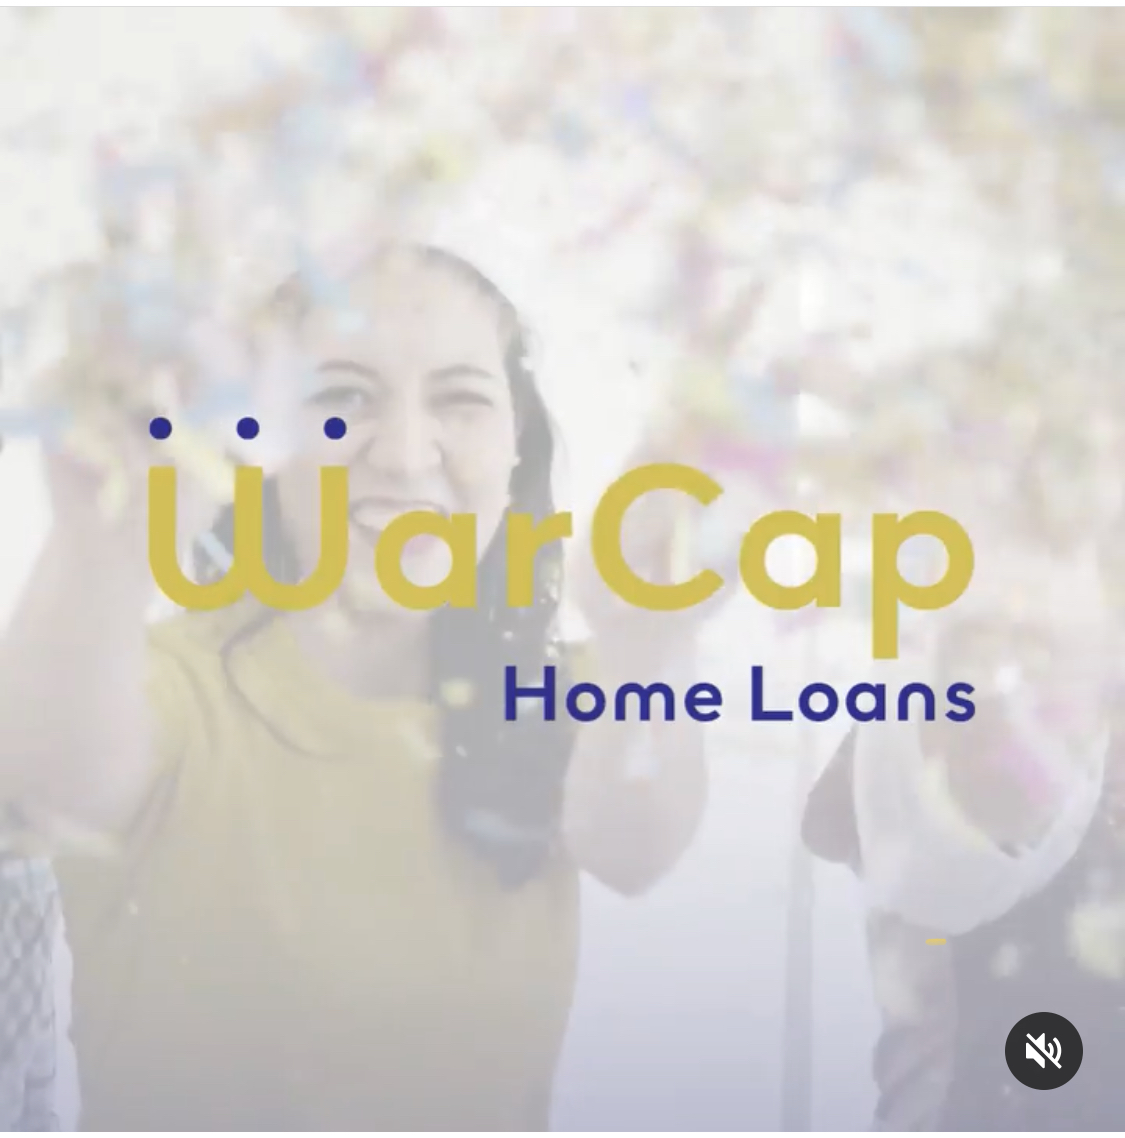 Warshaw Capital, LLC DBA WarCap Home Loans